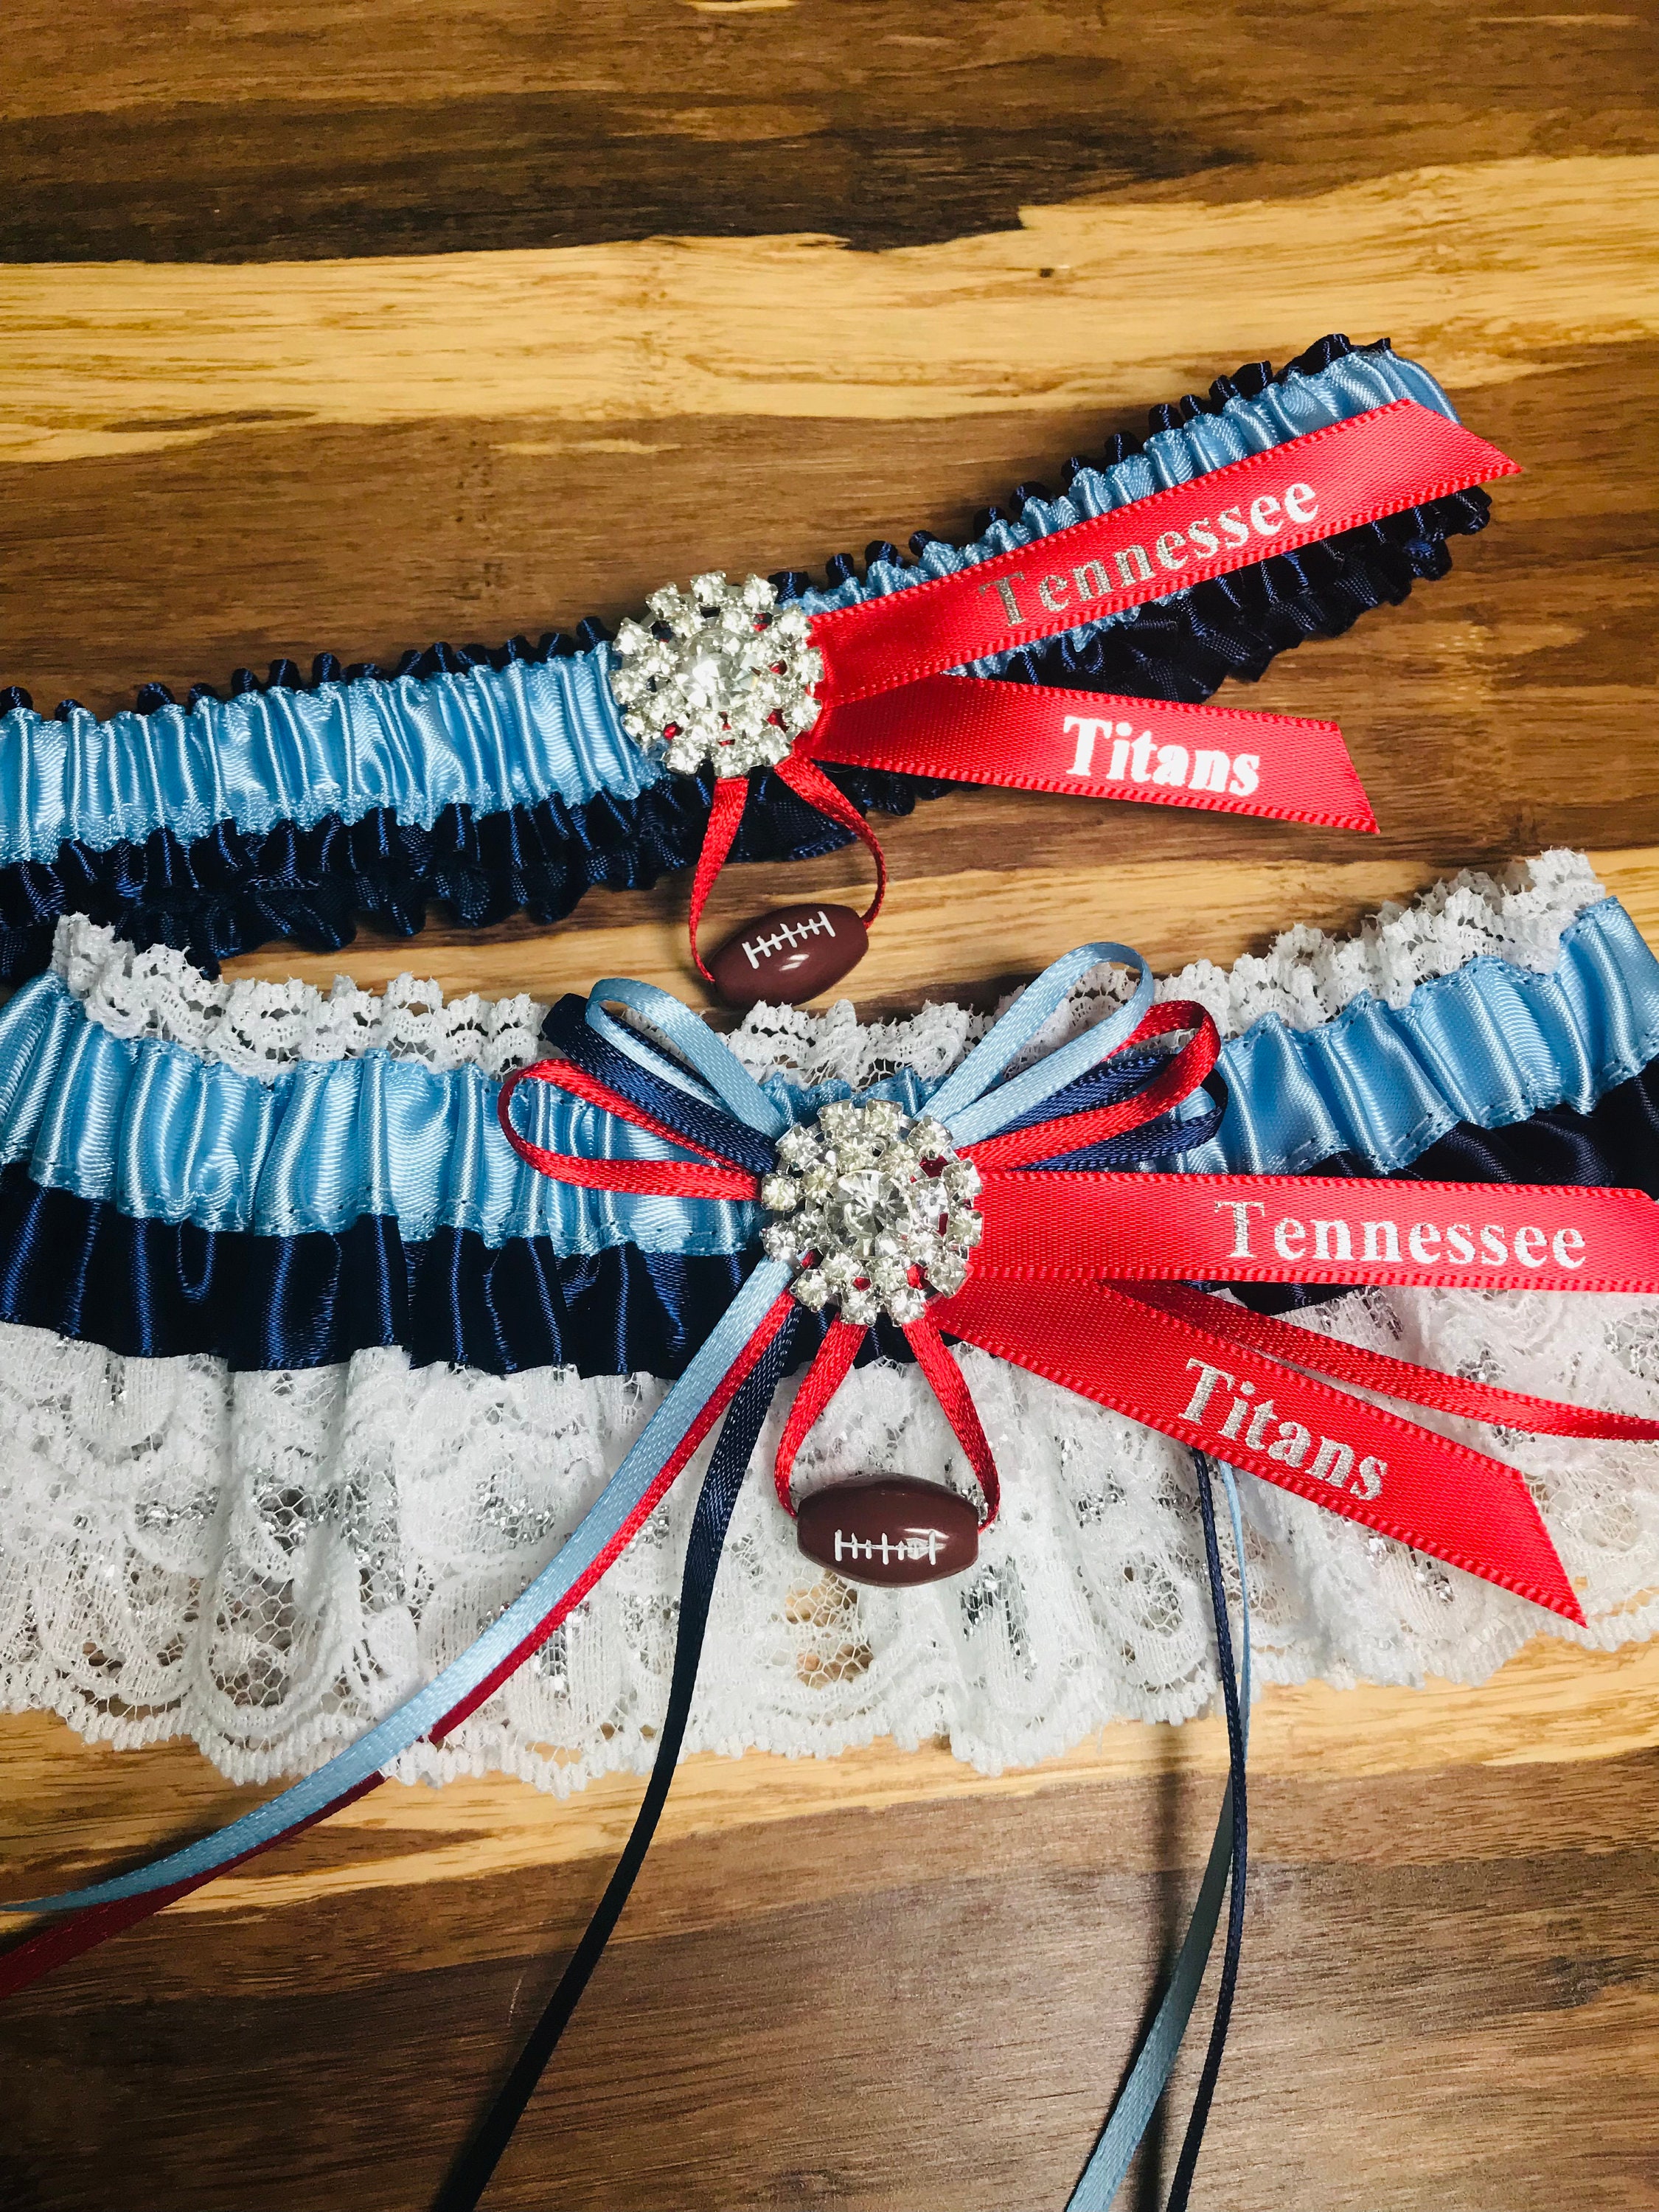 Tennessee Titans fabric handmade into bridal prom organza wedding garter set with football charm Customizable 